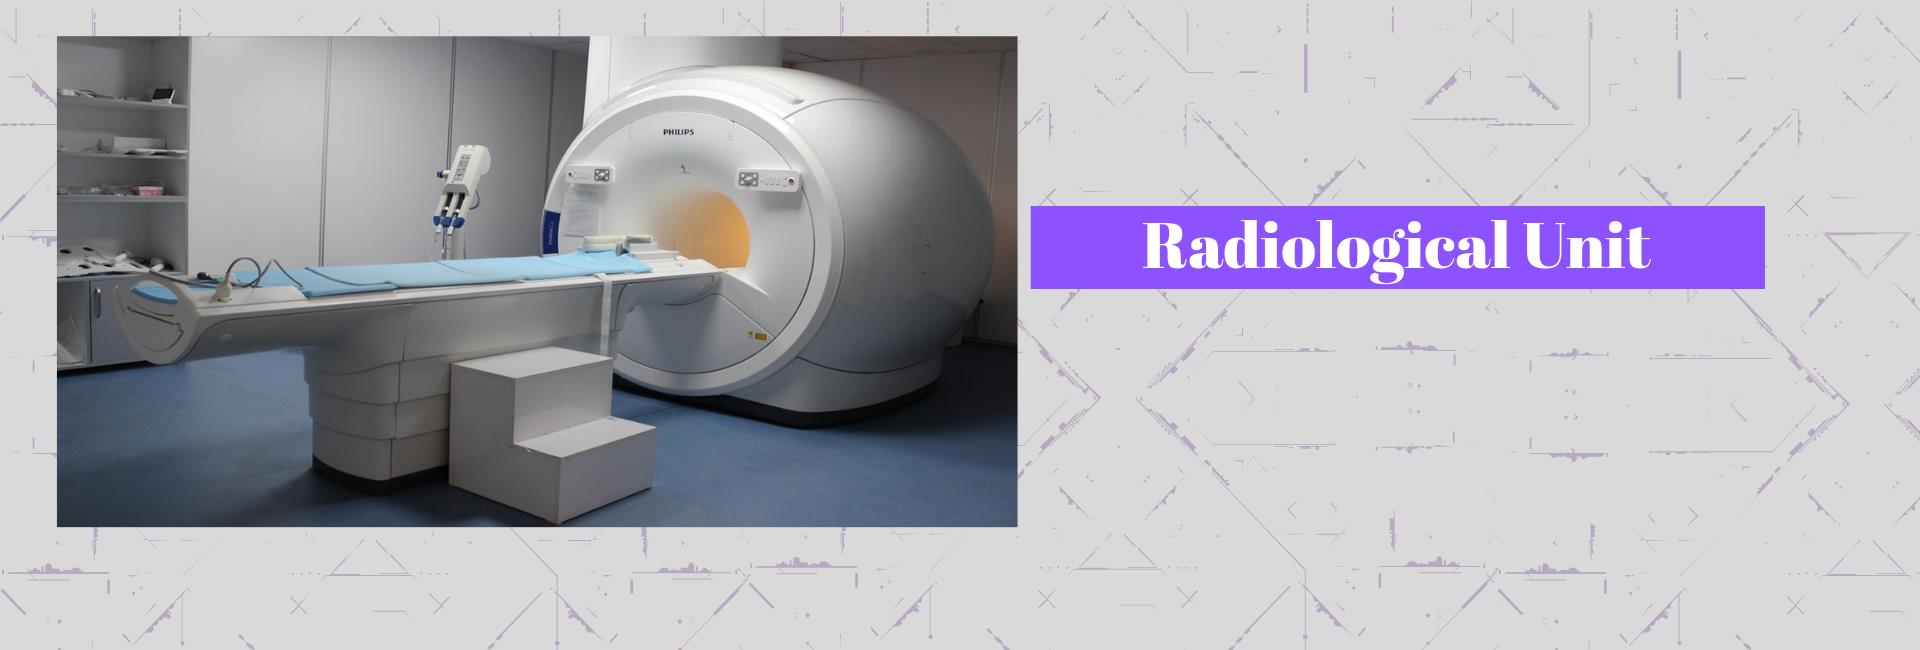 Radiological Unit